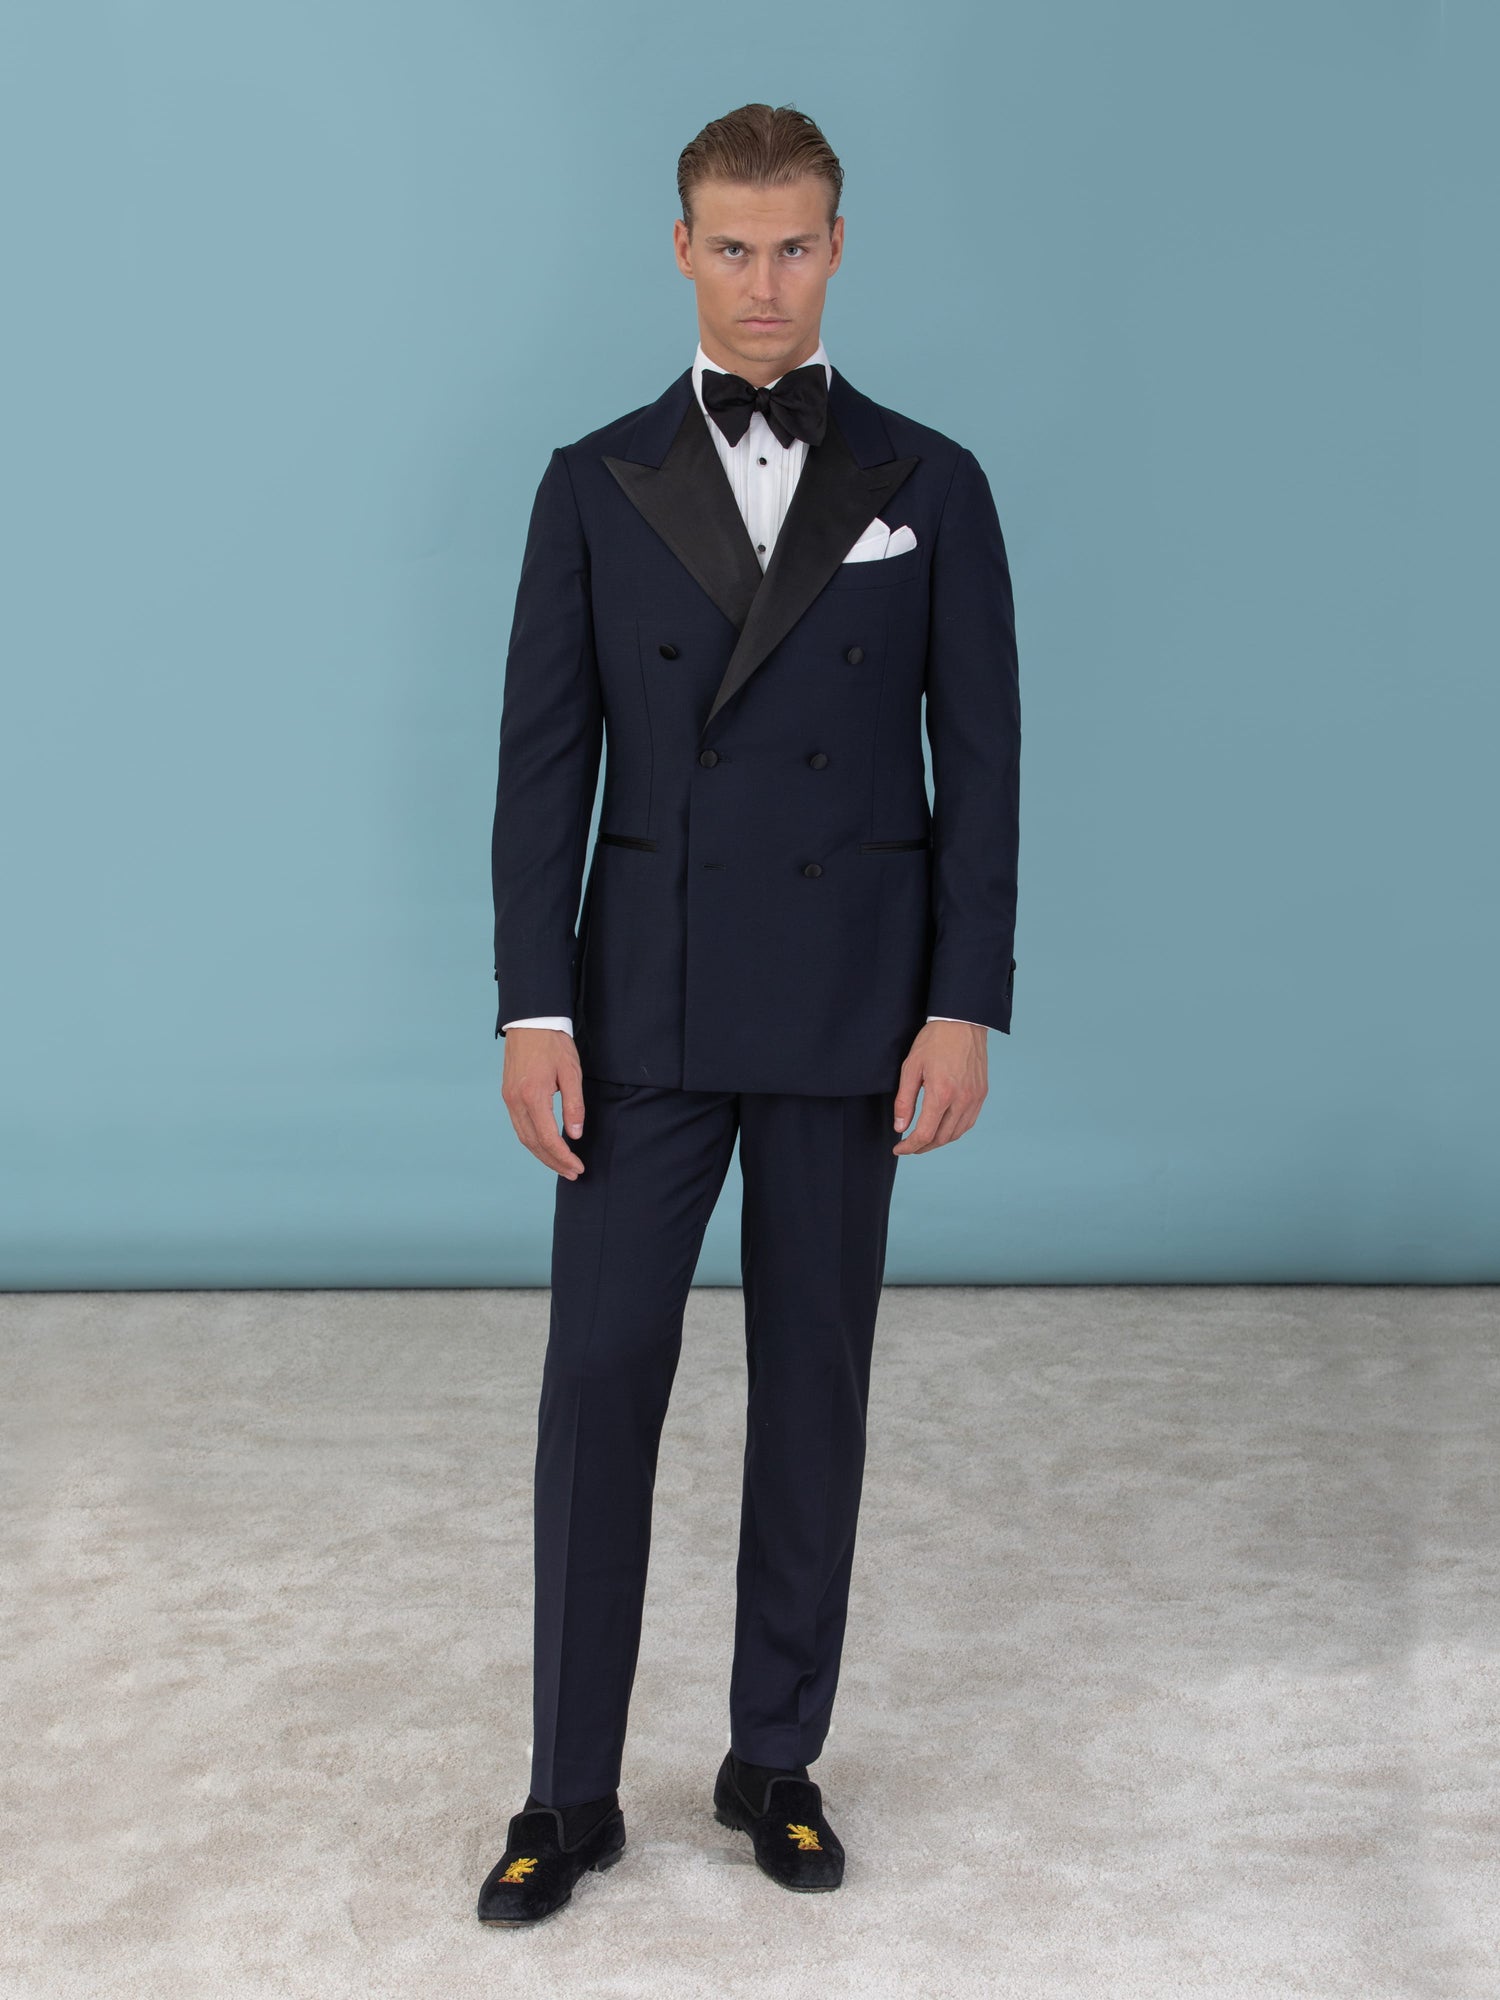 Midnight Blue S130 Tuxedo Suit - Grand Le Mar